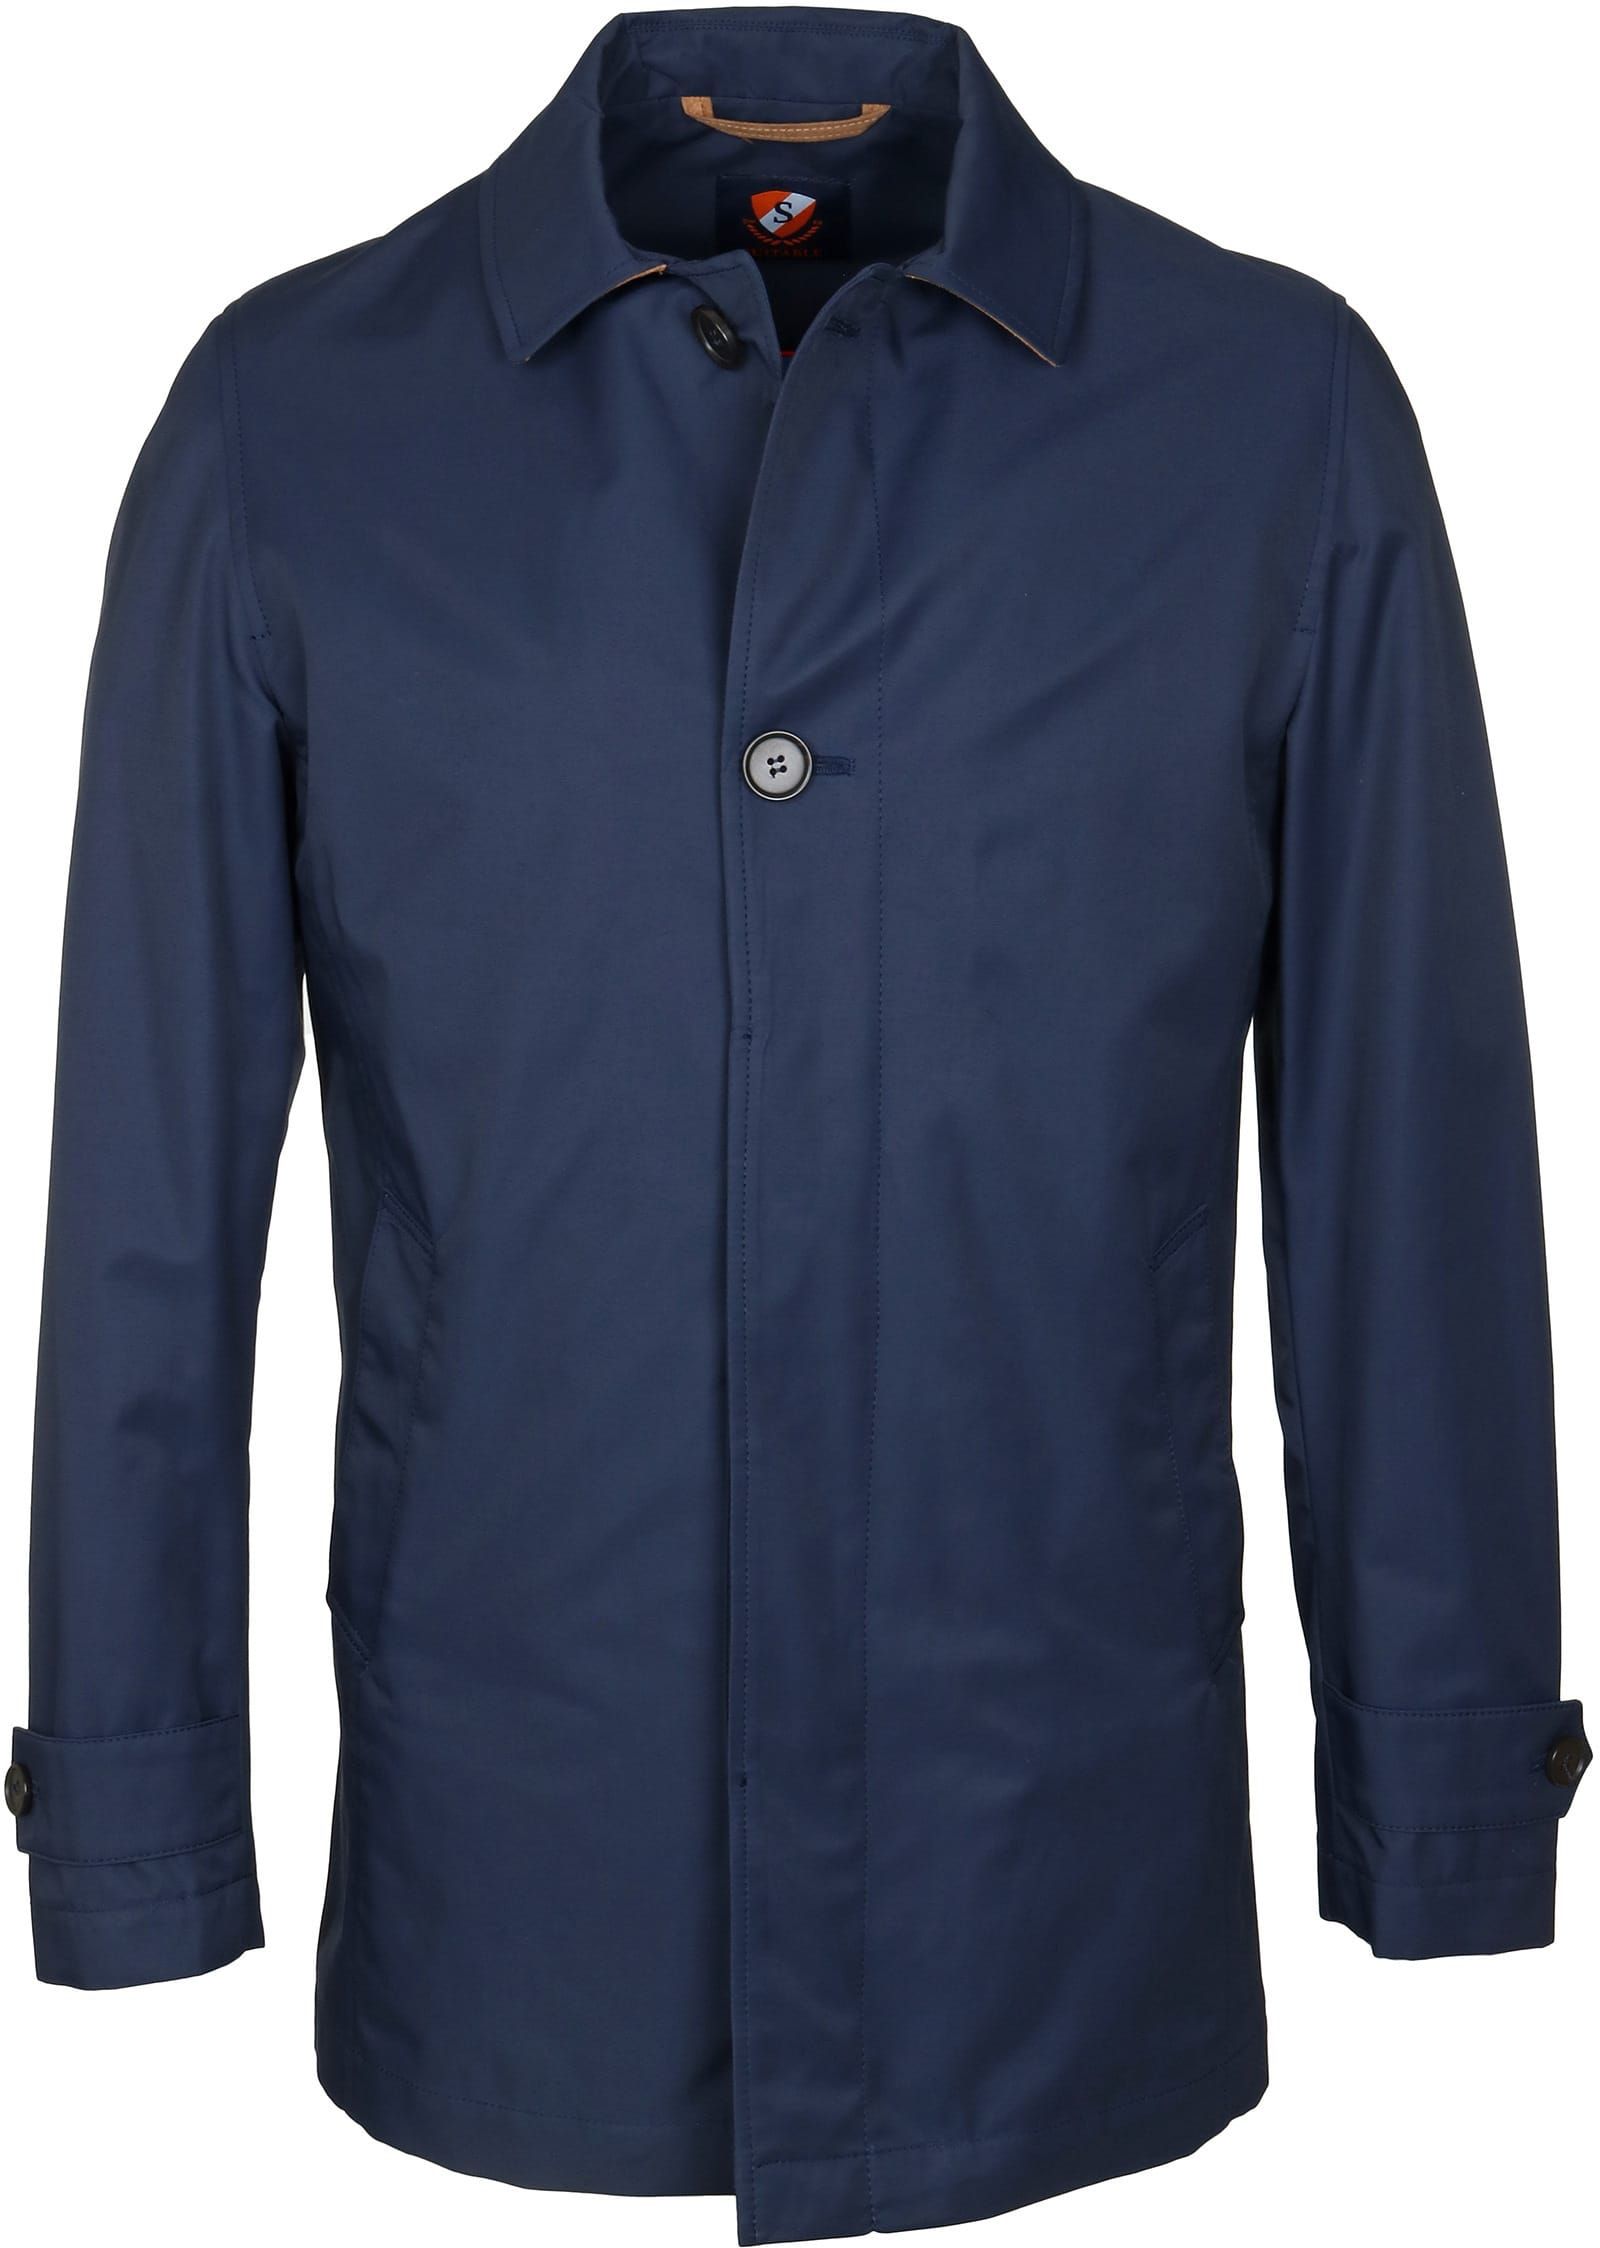 Suitable Coat Rosewood Navy Dark Blue Blue size 38-R